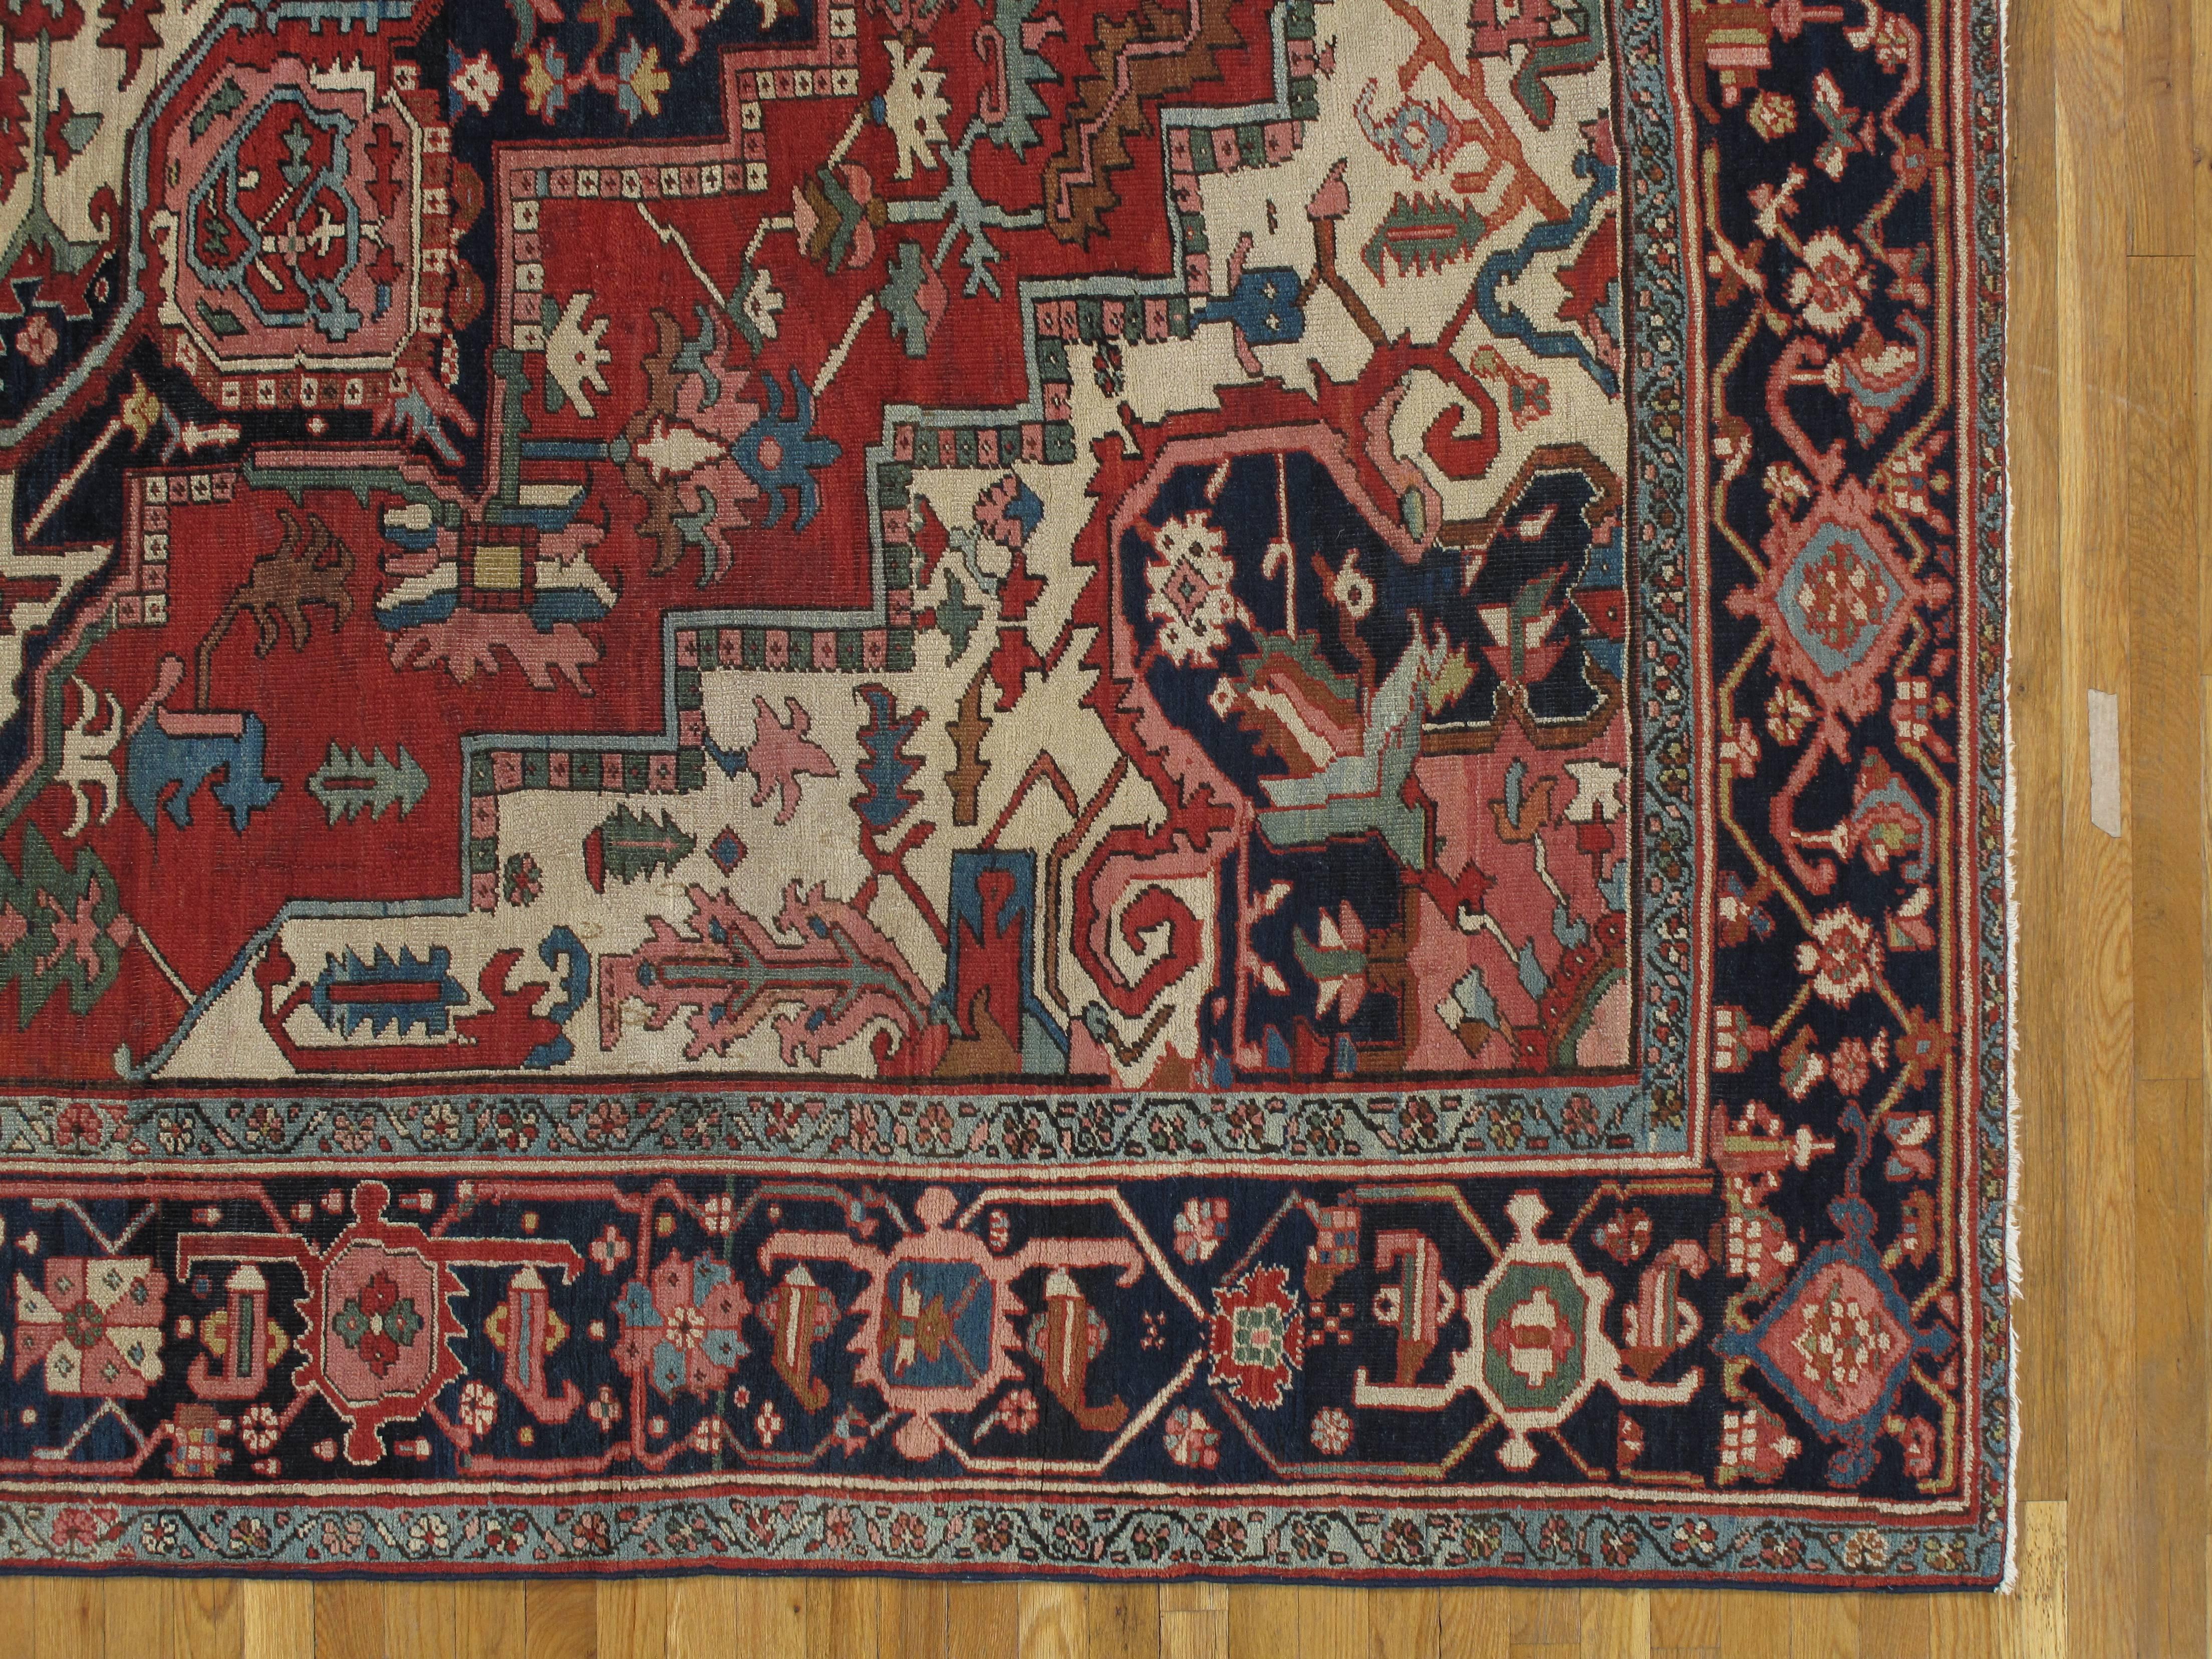 Persian Antique Handsome Serapi Carpet, Handmade Wool Carpet Red Navy, Light Blue, Ivory For Sale